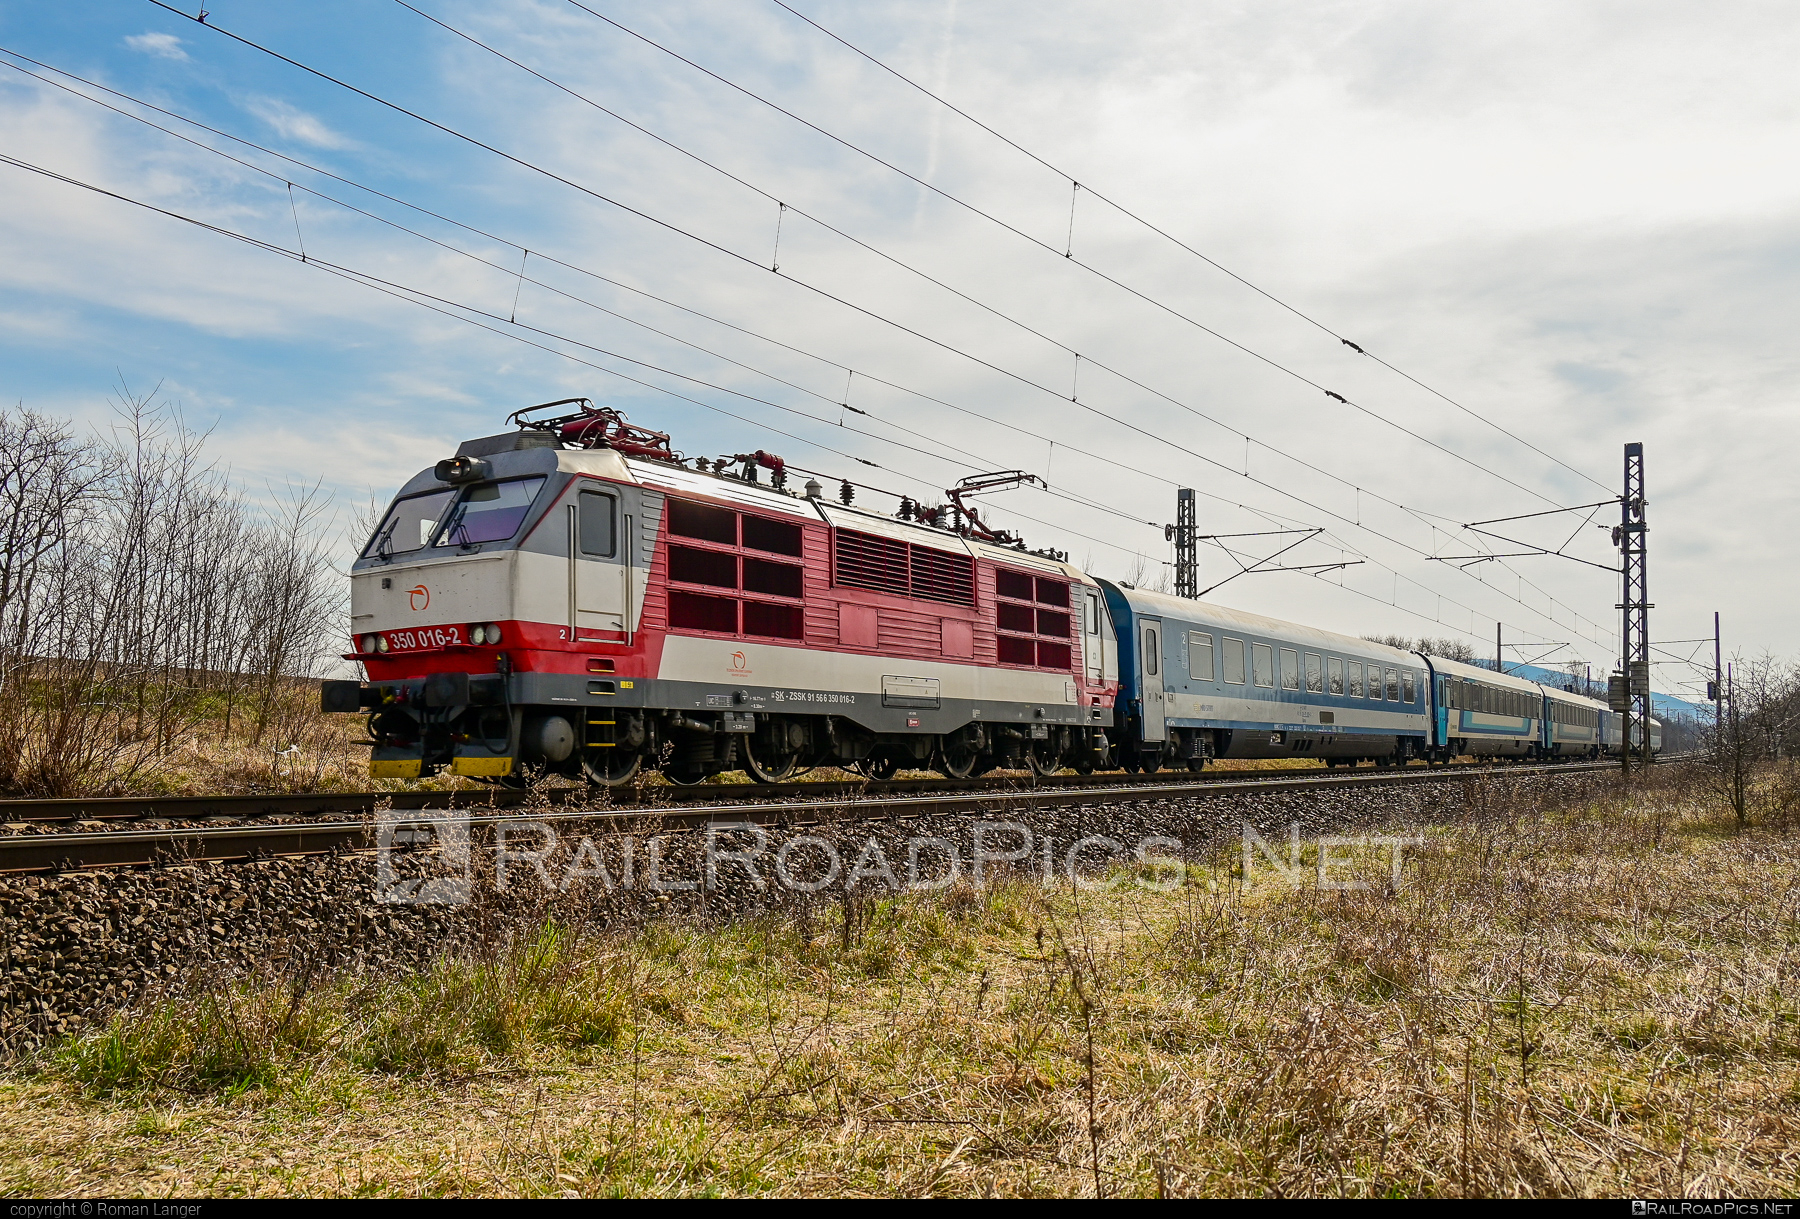 Škoda 55E - 350 016-2 operated by Železničná Spoločnost' Slovensko, a.s. #ZeleznicnaSpolocnostSlovensko #bathory #gorila #locomotive350 #skoda #skoda55e #zssk